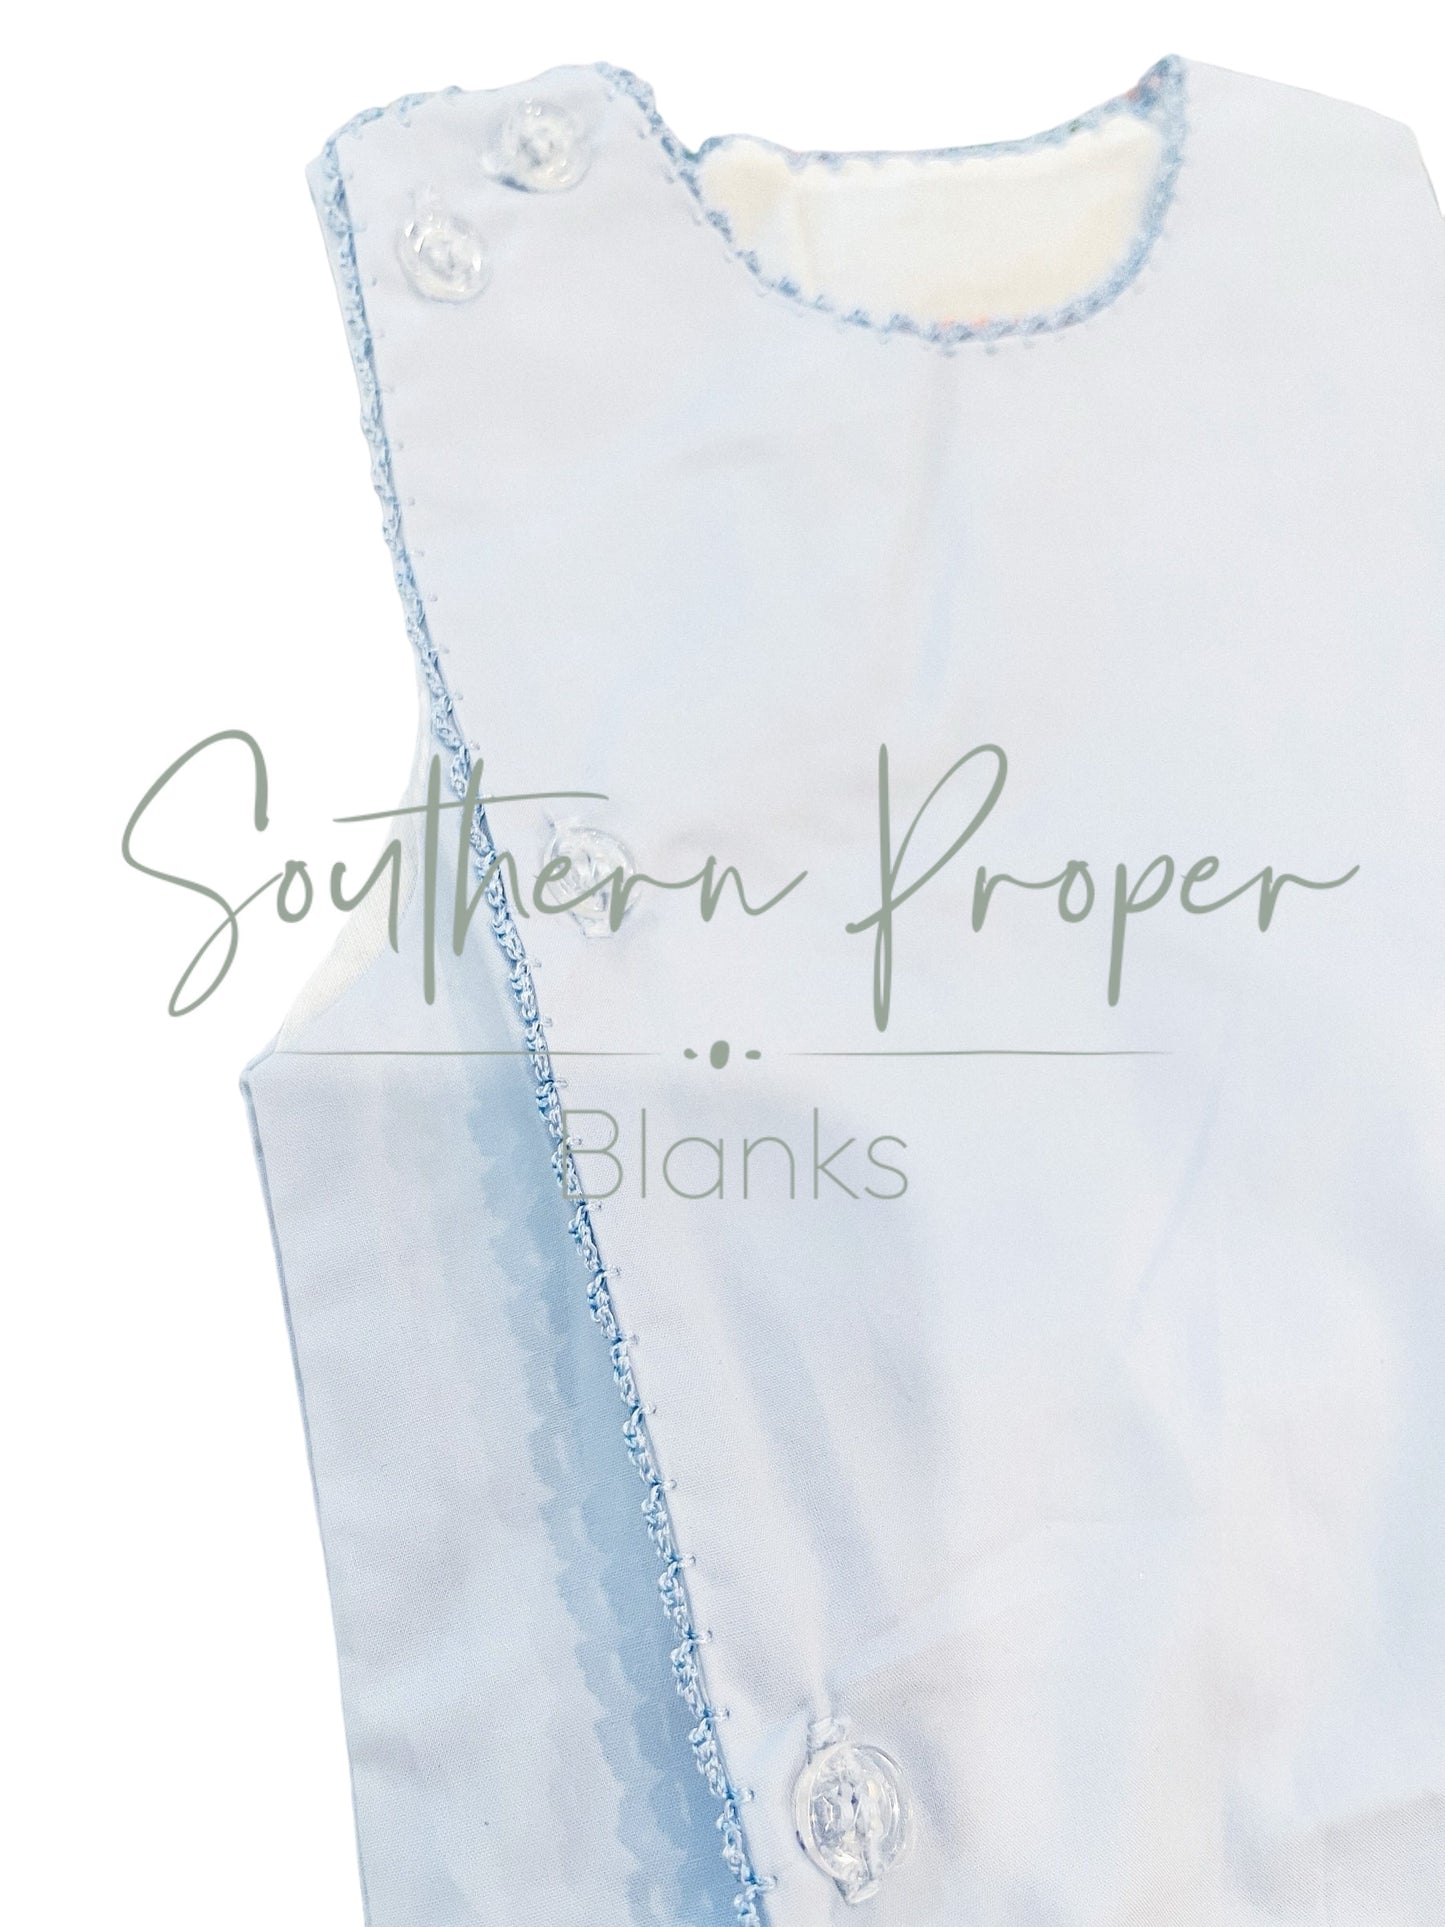 (PRE-ORDER ETA end of JUNE. ) Diaper Set 2pcs- Fabric change. Cotton/polyester- see description for update